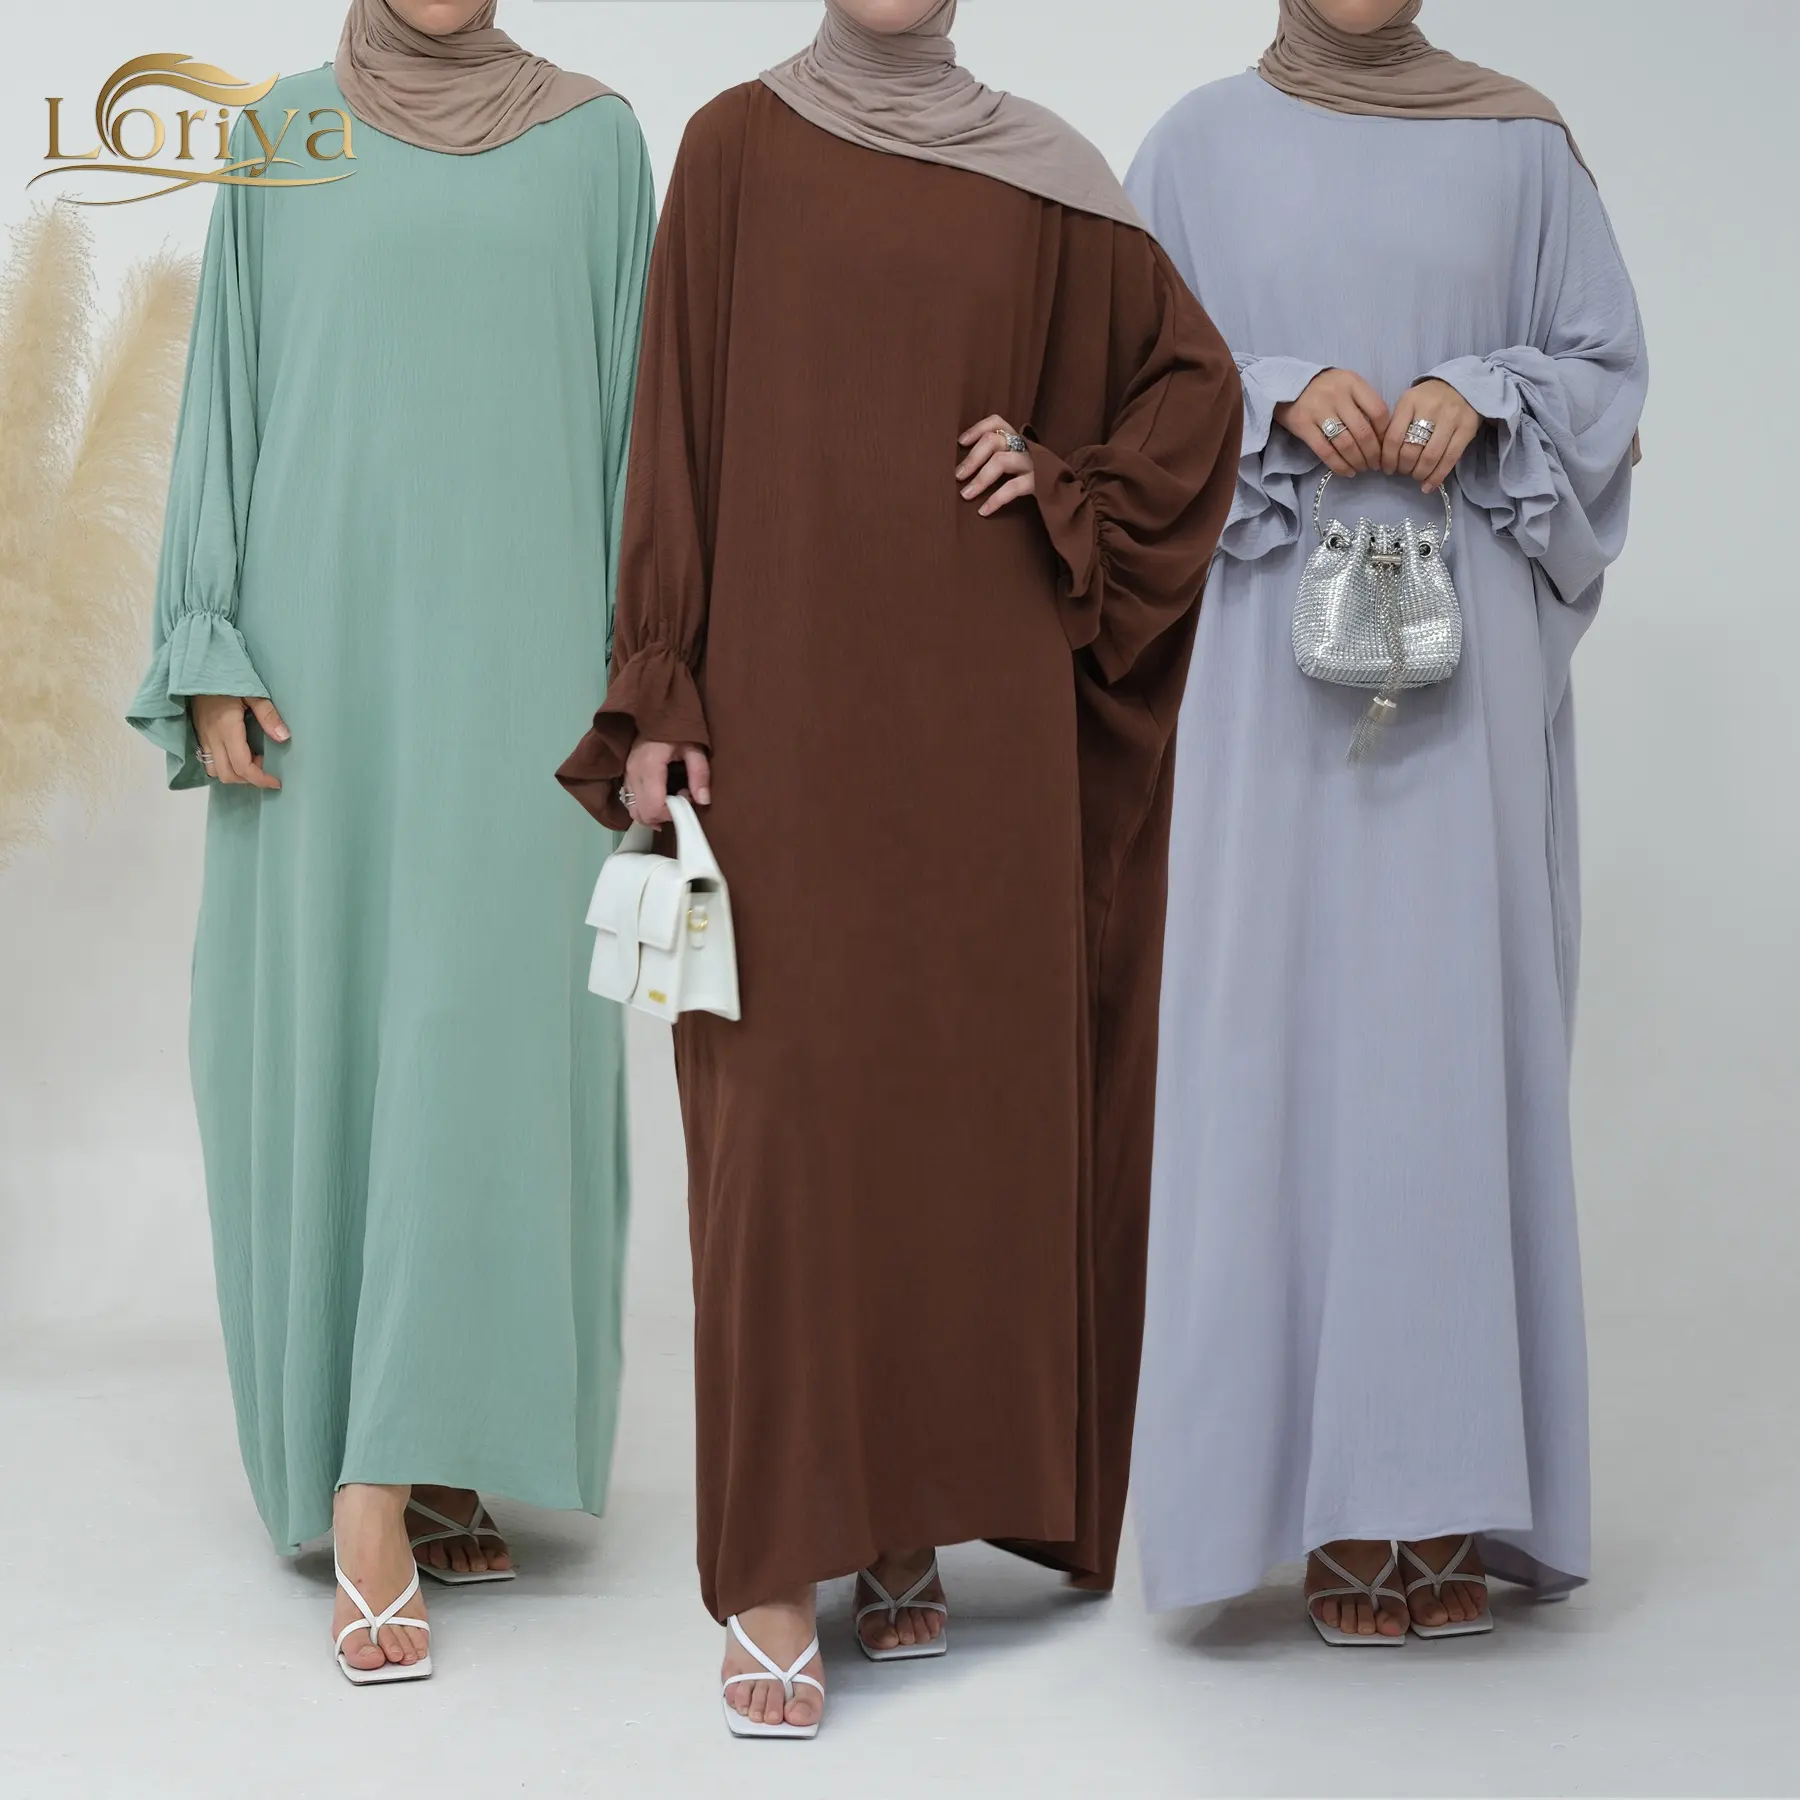 Loriya Jazz Fabric Abaya Solid Color Plus size Abaya Modest Muslim Women Dresses Traditional Muslim Clothing & Accessories